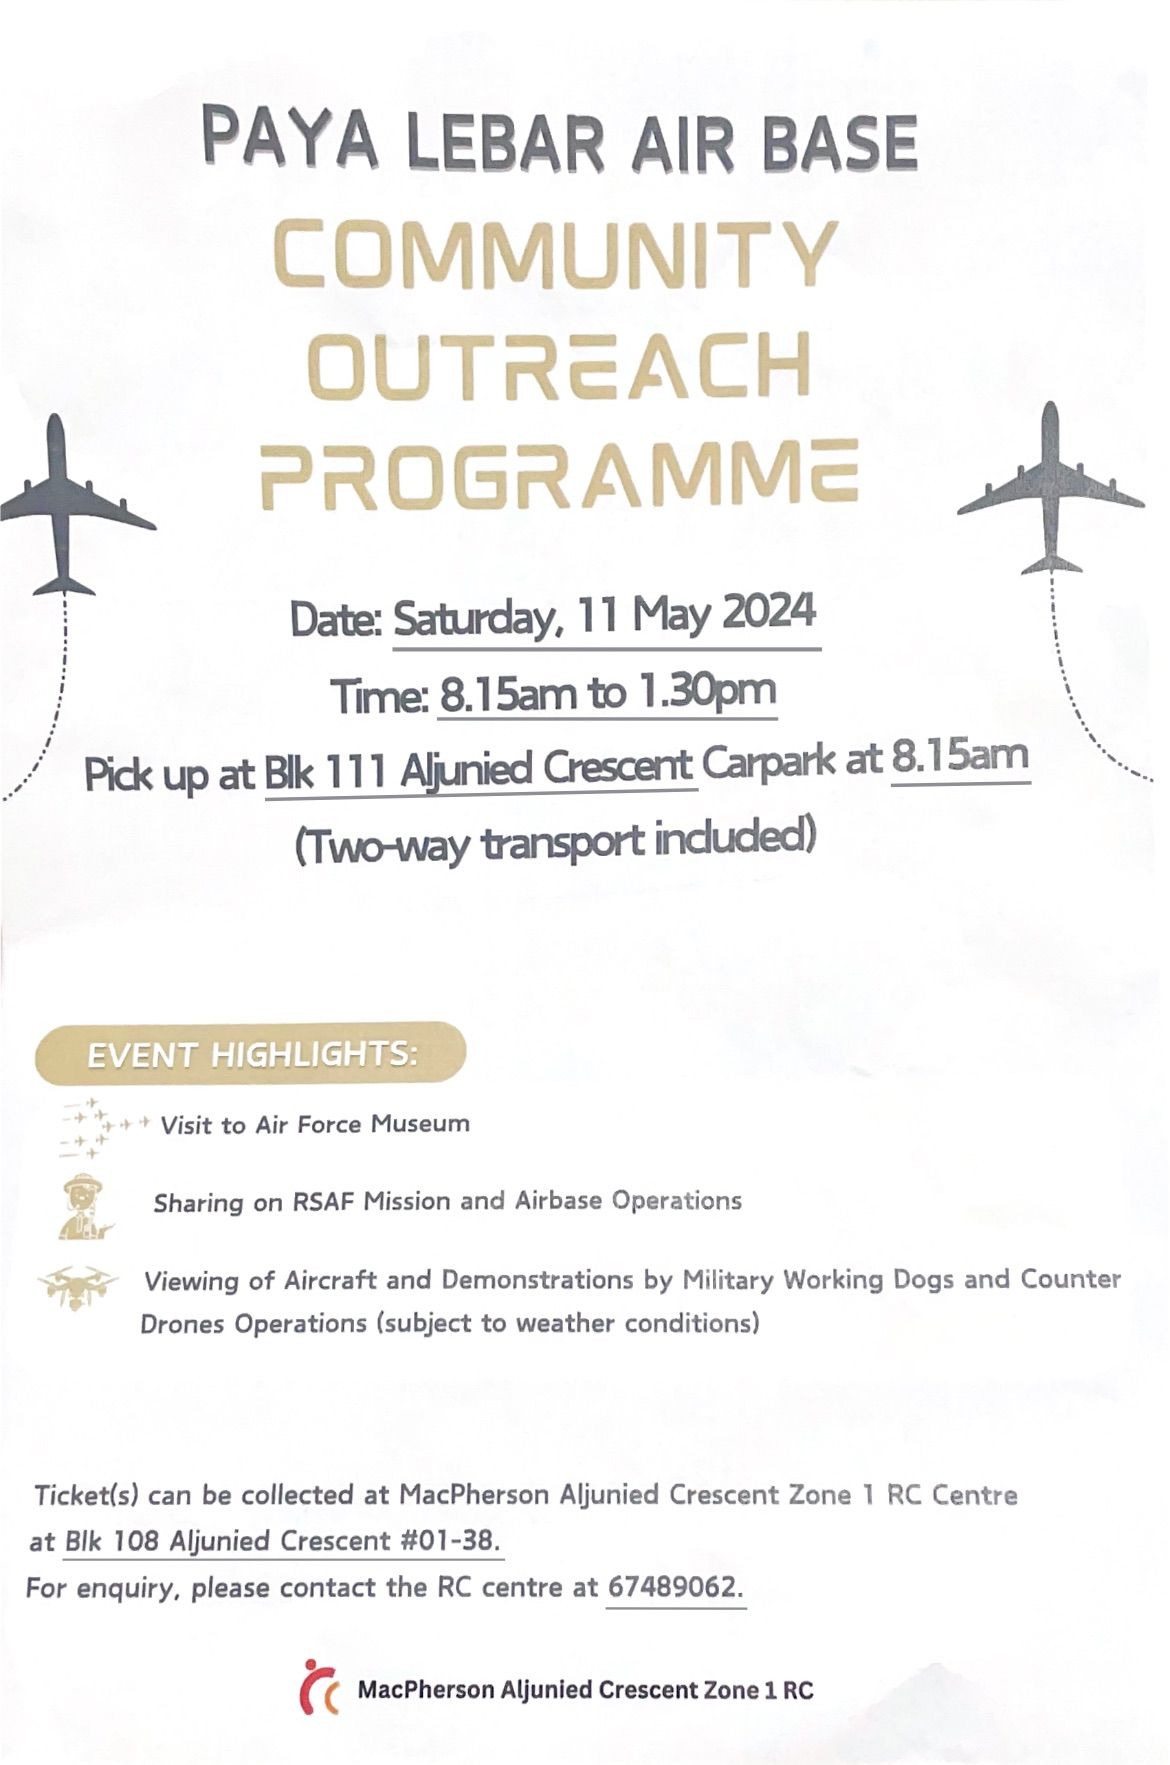 Paya Lebar Air Base - Community Outreach Programme